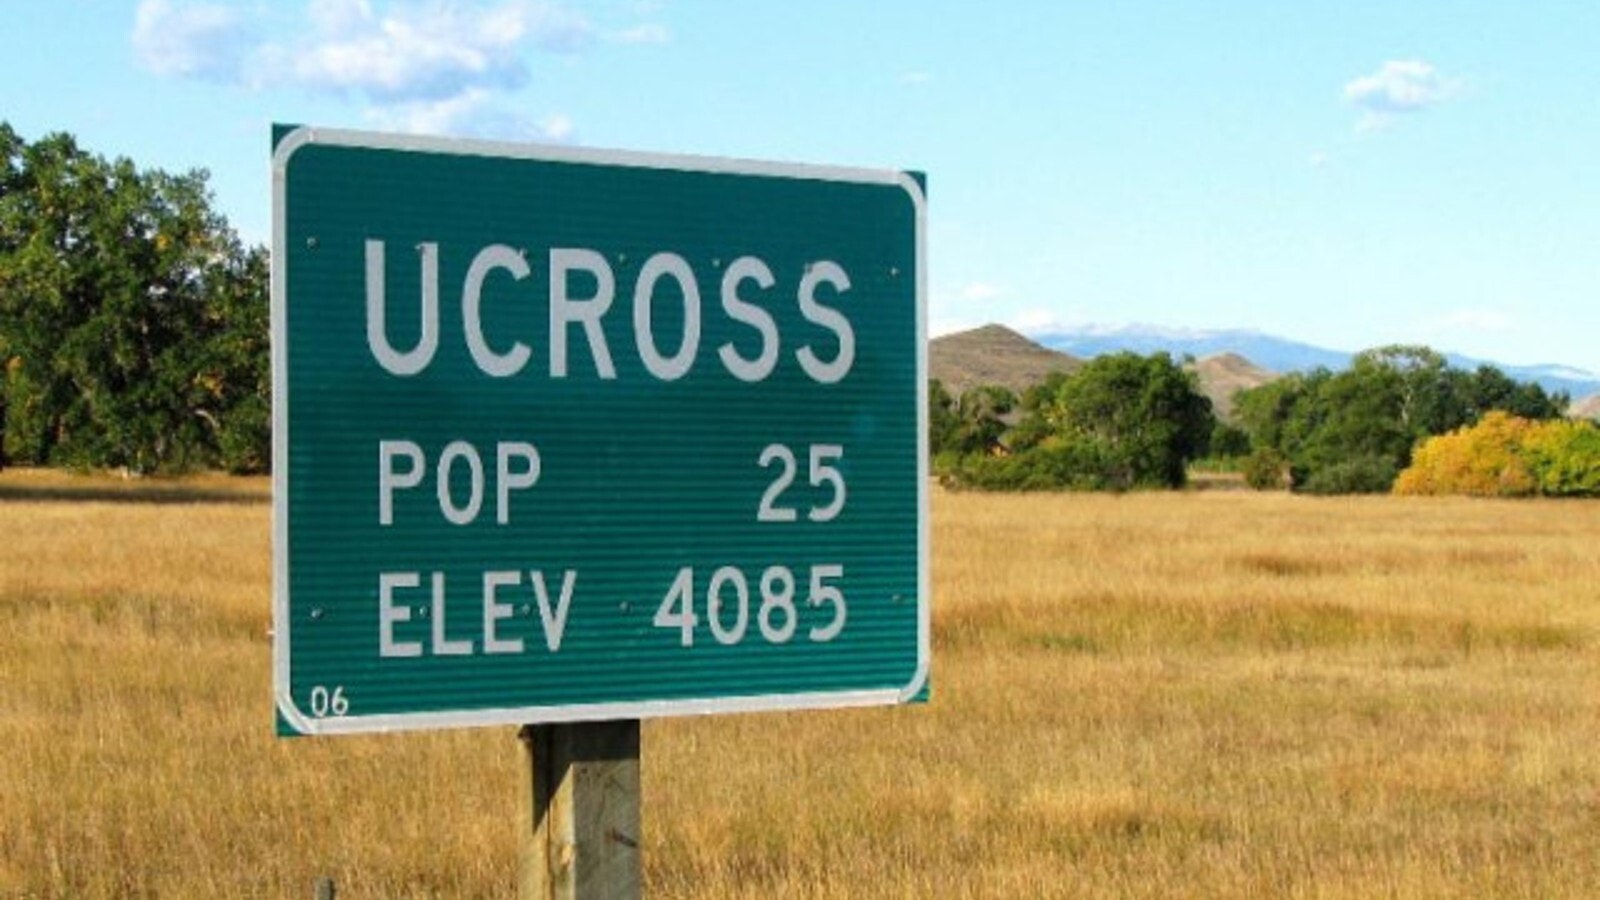 Ucross road sign